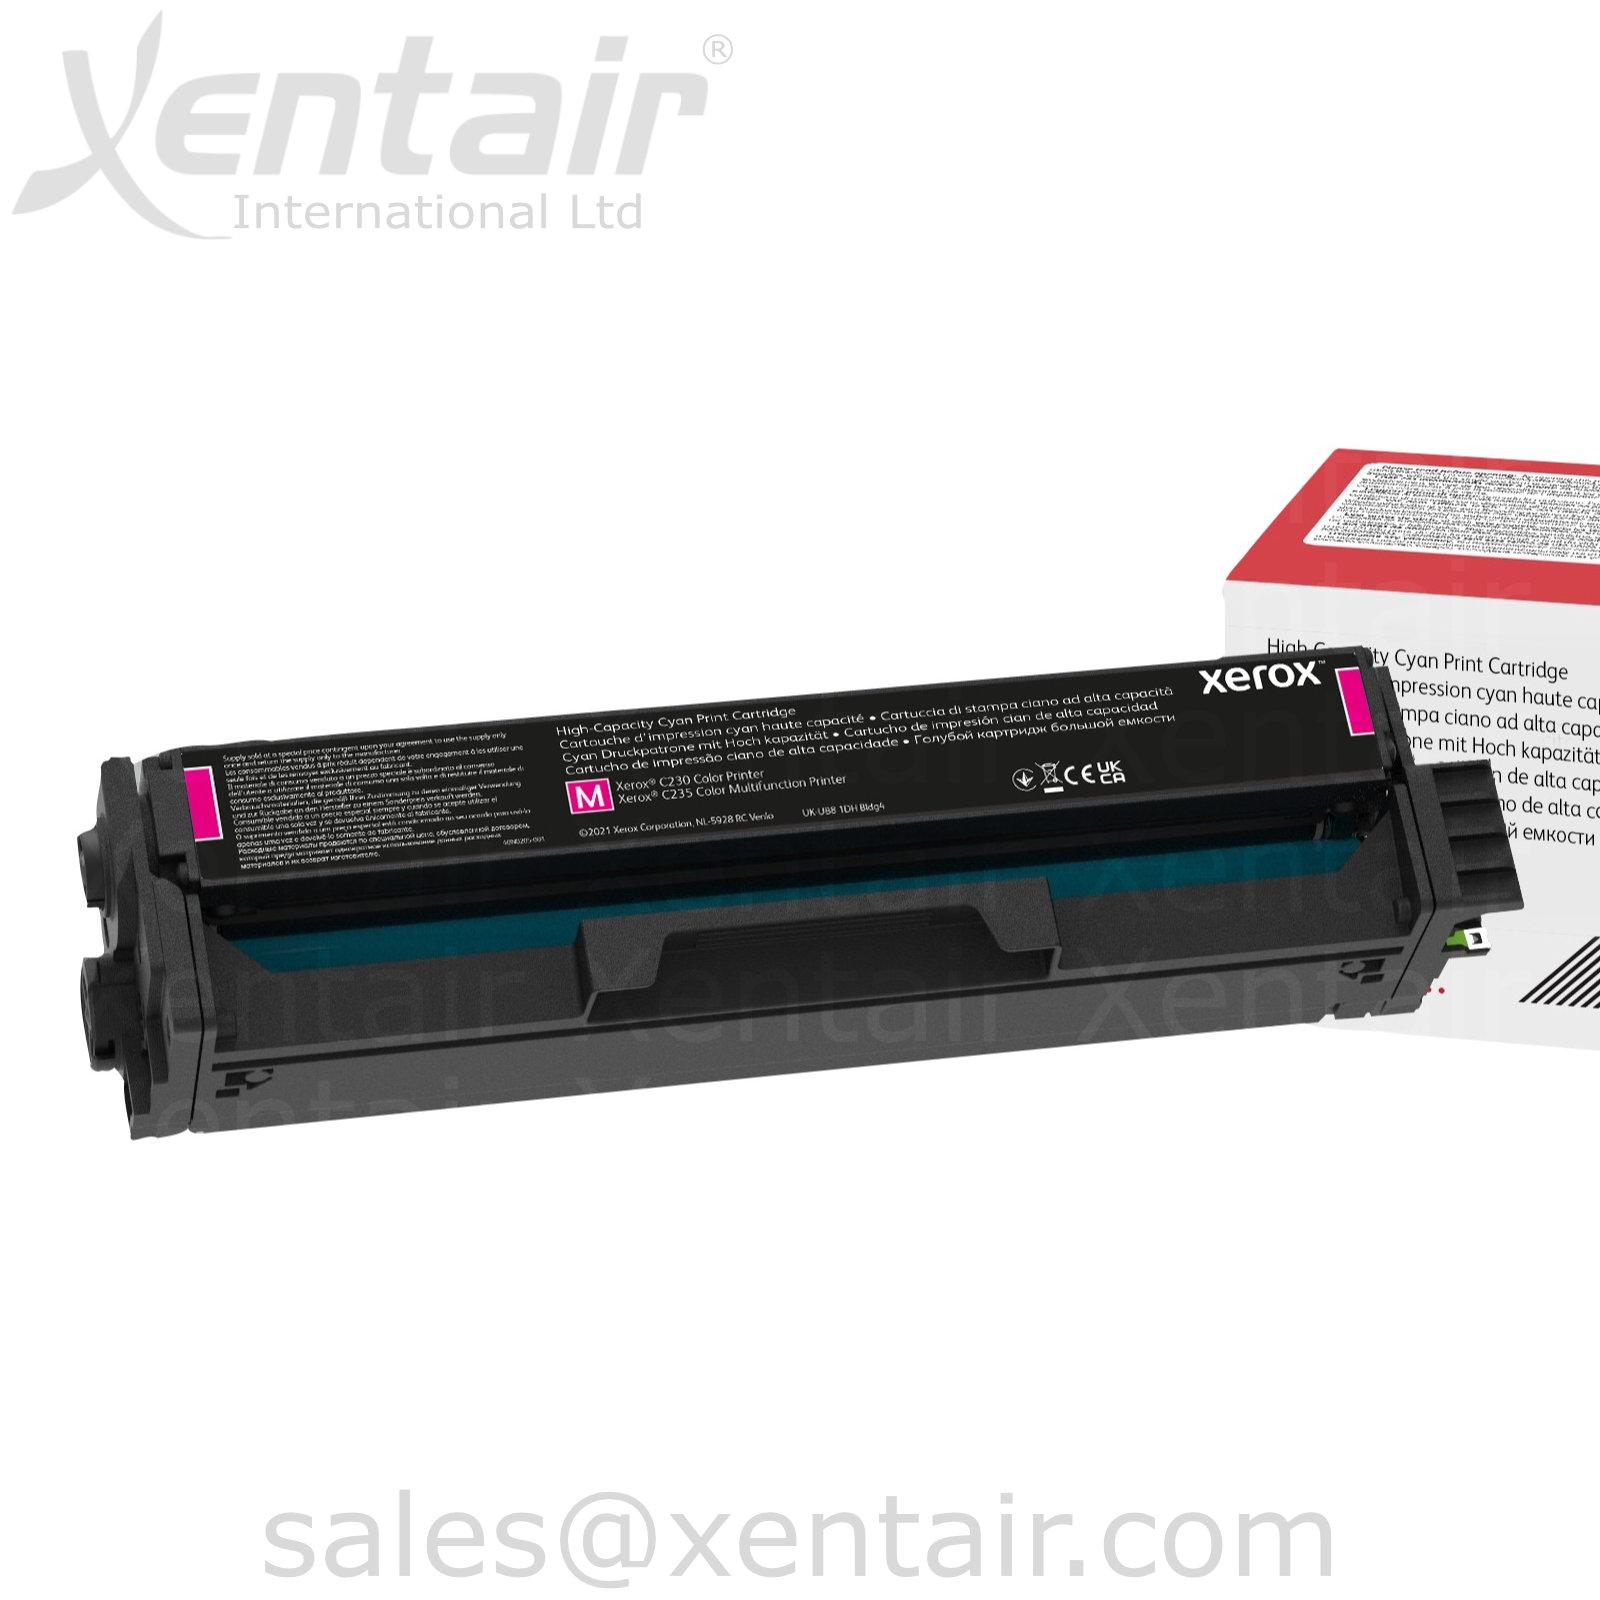 Xerox® C230 C235 High Capacity Magenta Toner Cartridge 006R04393 6R04393